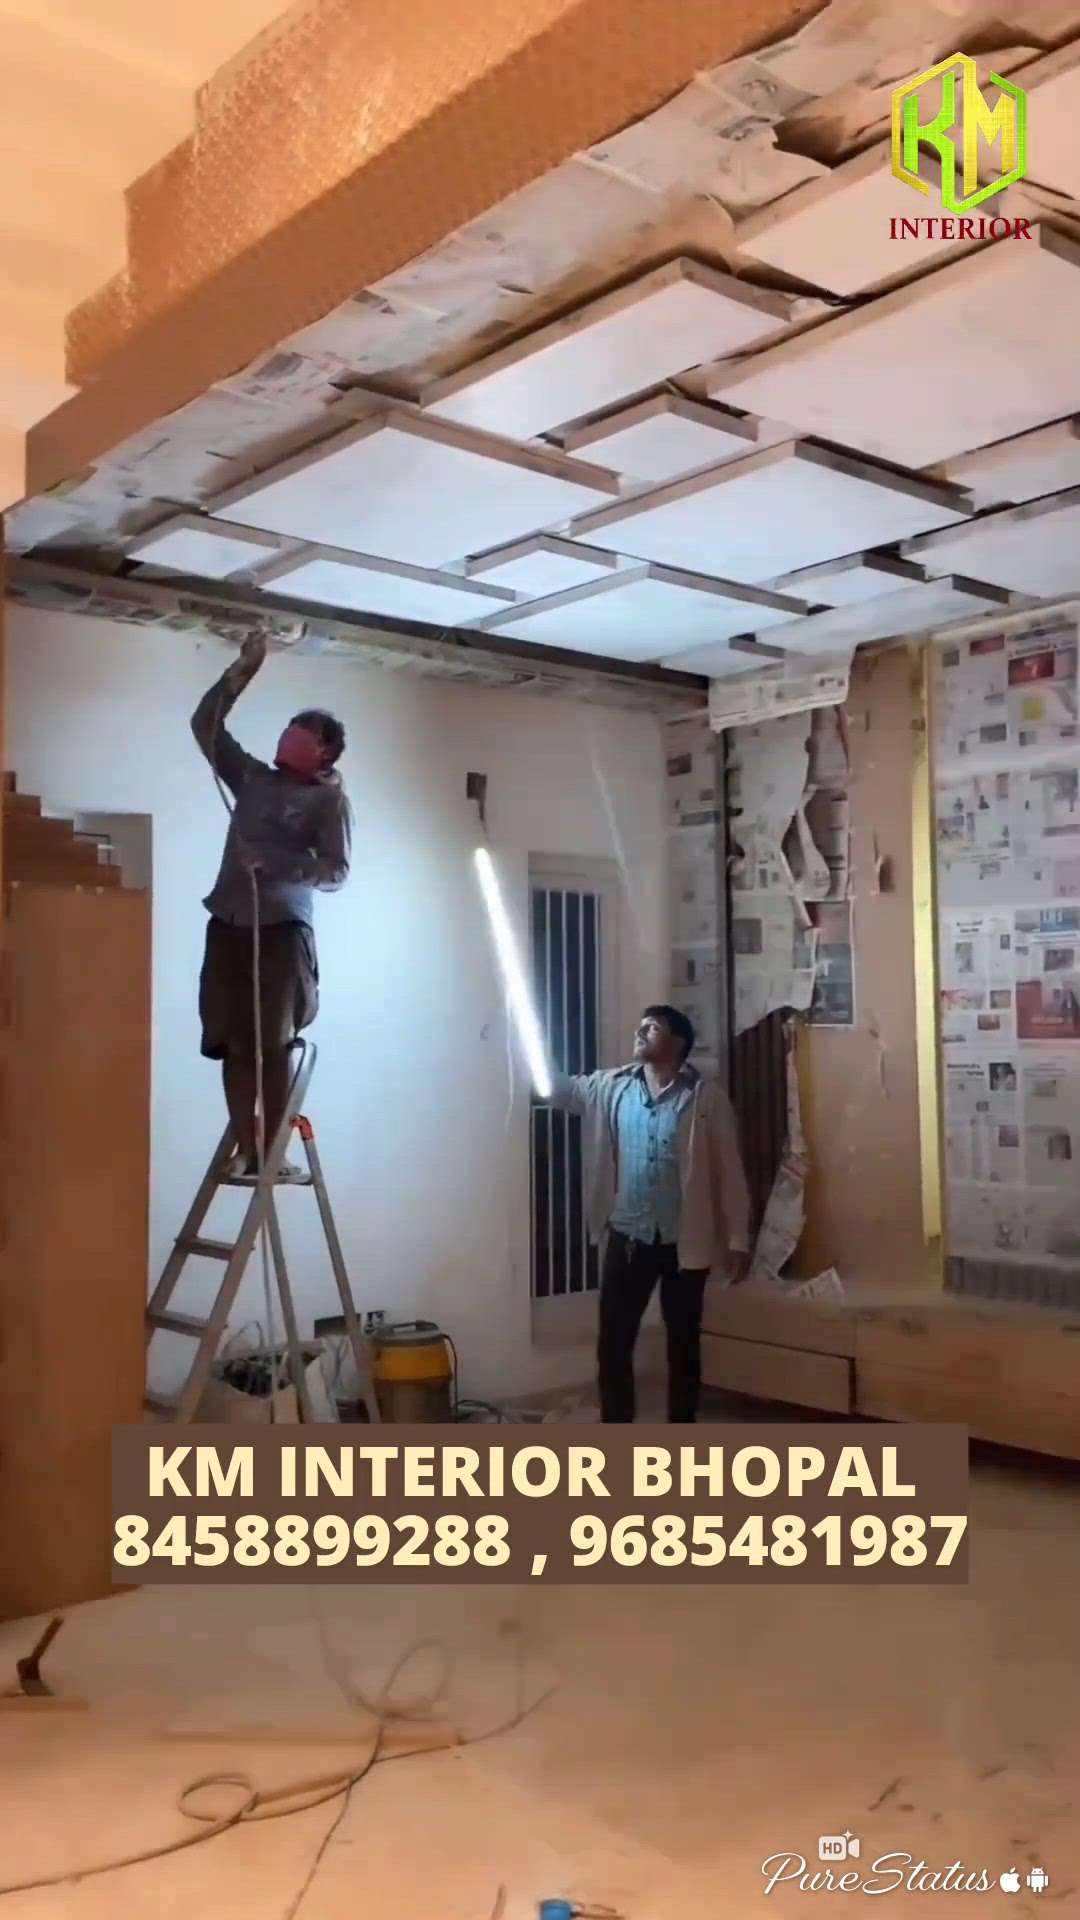 KM INTERIOR BHOPAL M.P. 43
8458899288 , 9685481987

#interiordesignerinbhopal #modularfurniture #bhopal_the_city_of_lakes #BedroomDesigns  #BedroomDecor  #LivingroomDesigns